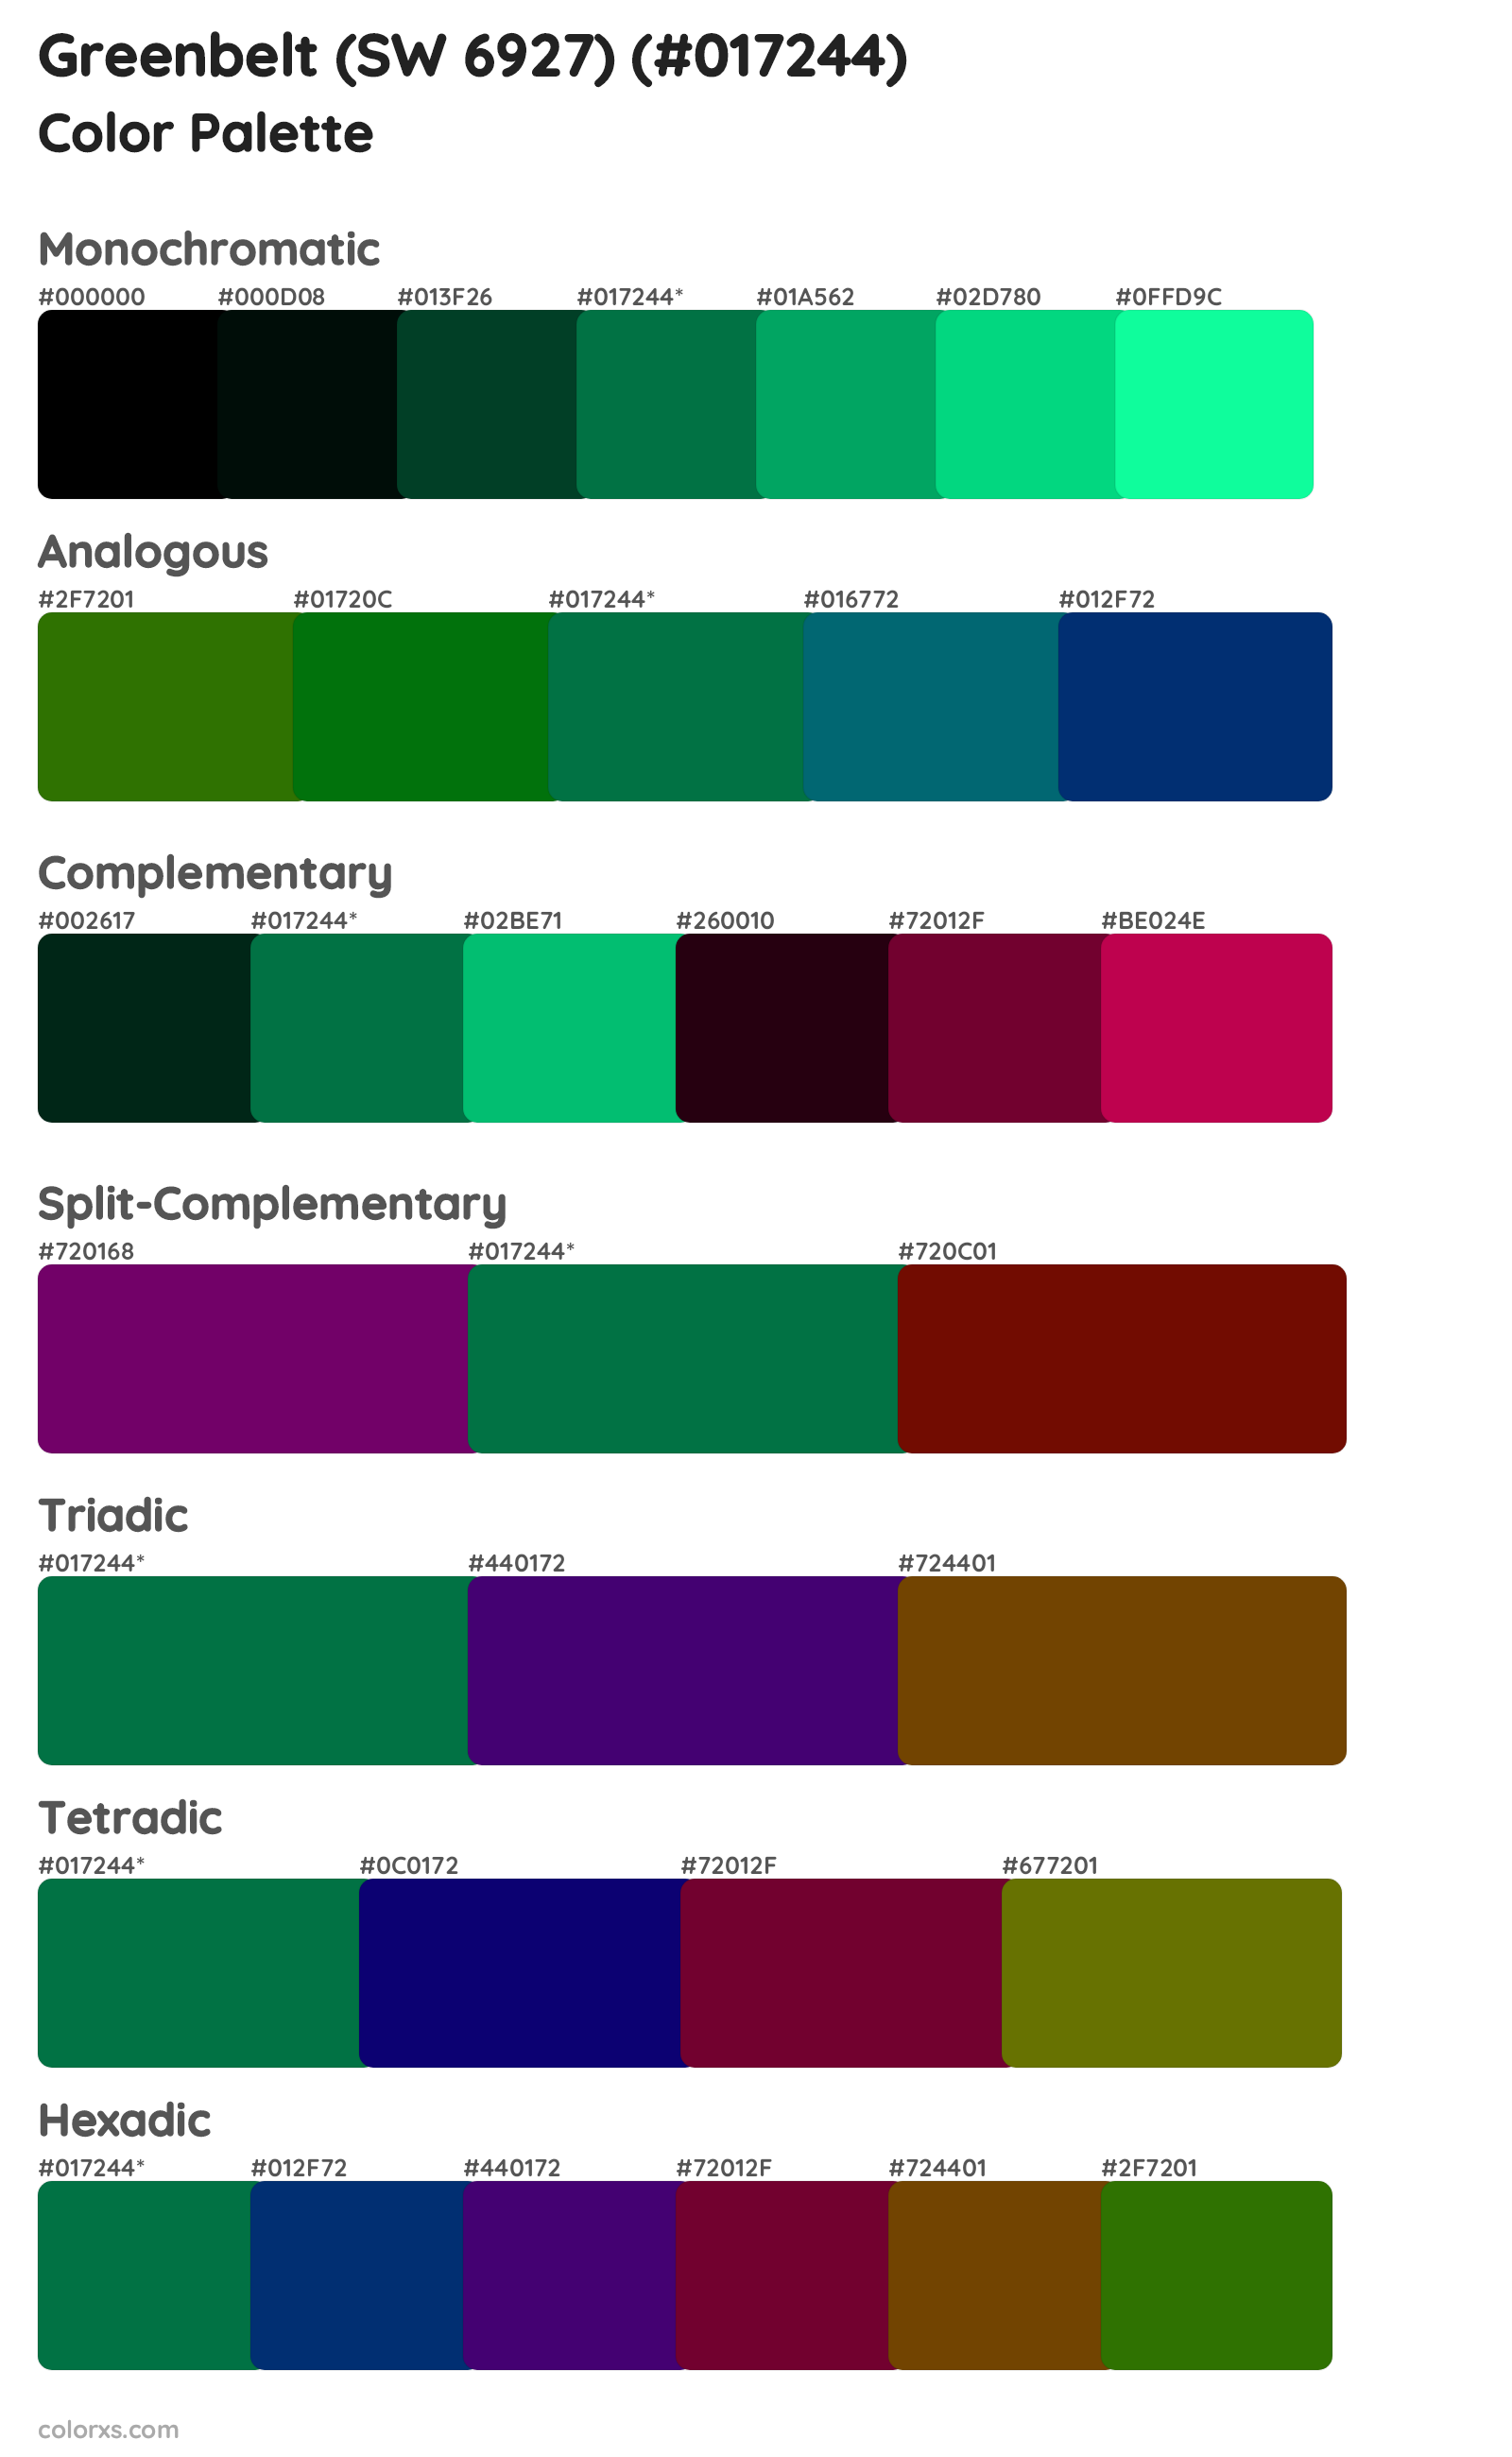 Greenbelt (SW 6927) Color Scheme Palettes